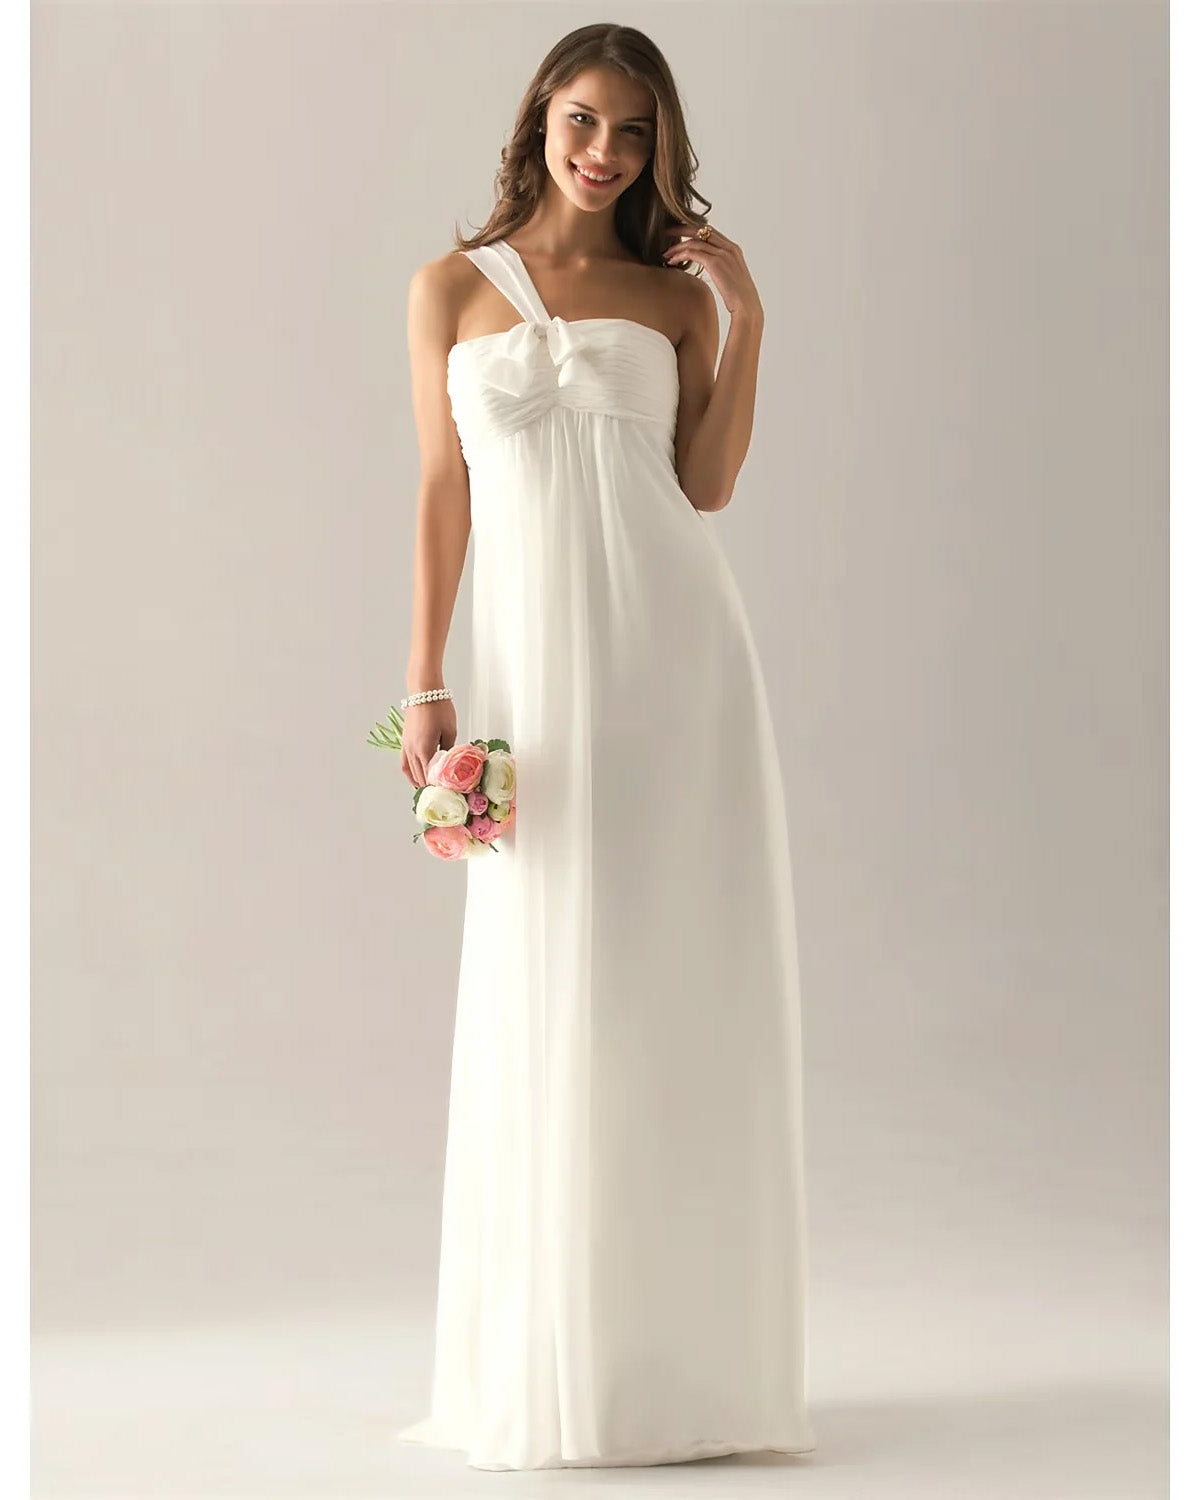 Sheath / Column Bridesmaid Dress One Shoulder Sleeveless Elegant Floor Length Chiffon with Bow(s) / Pleats / Ruched